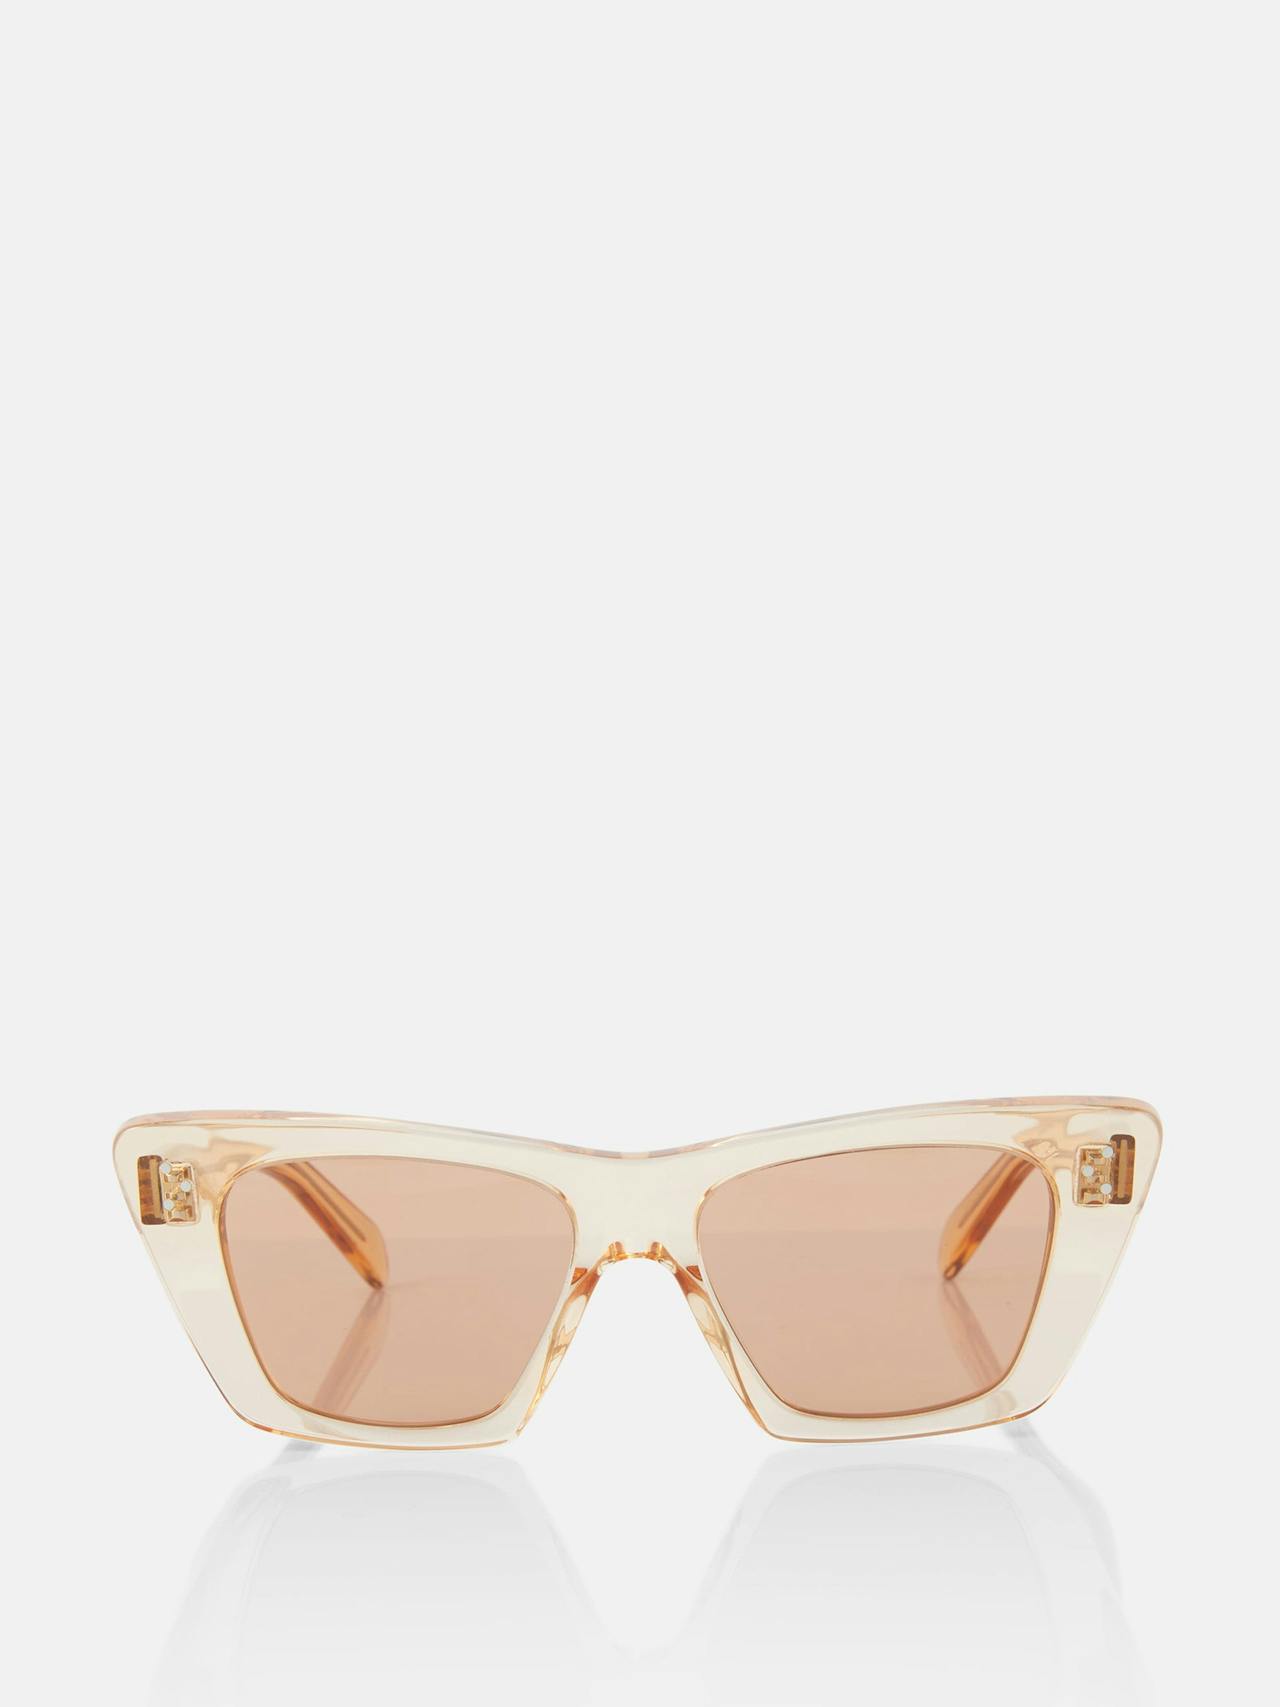 S187 cat-eye sunglasses